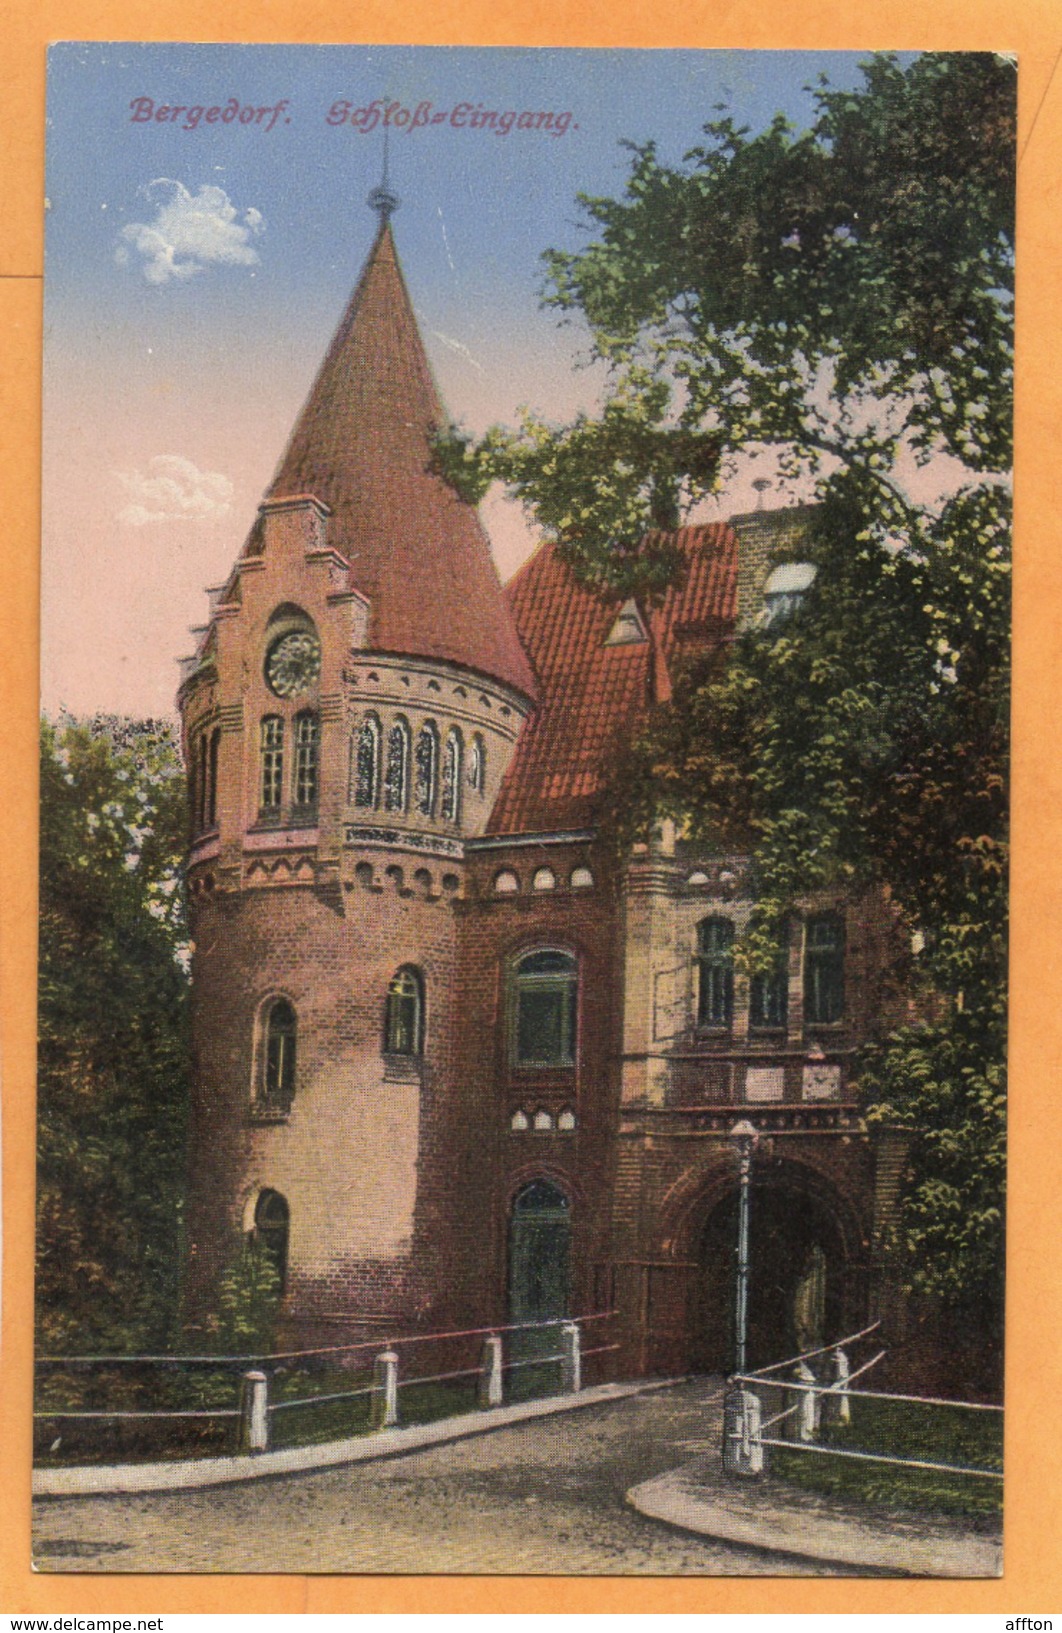 Bergedorf 1915 Postcard - Bergedorf